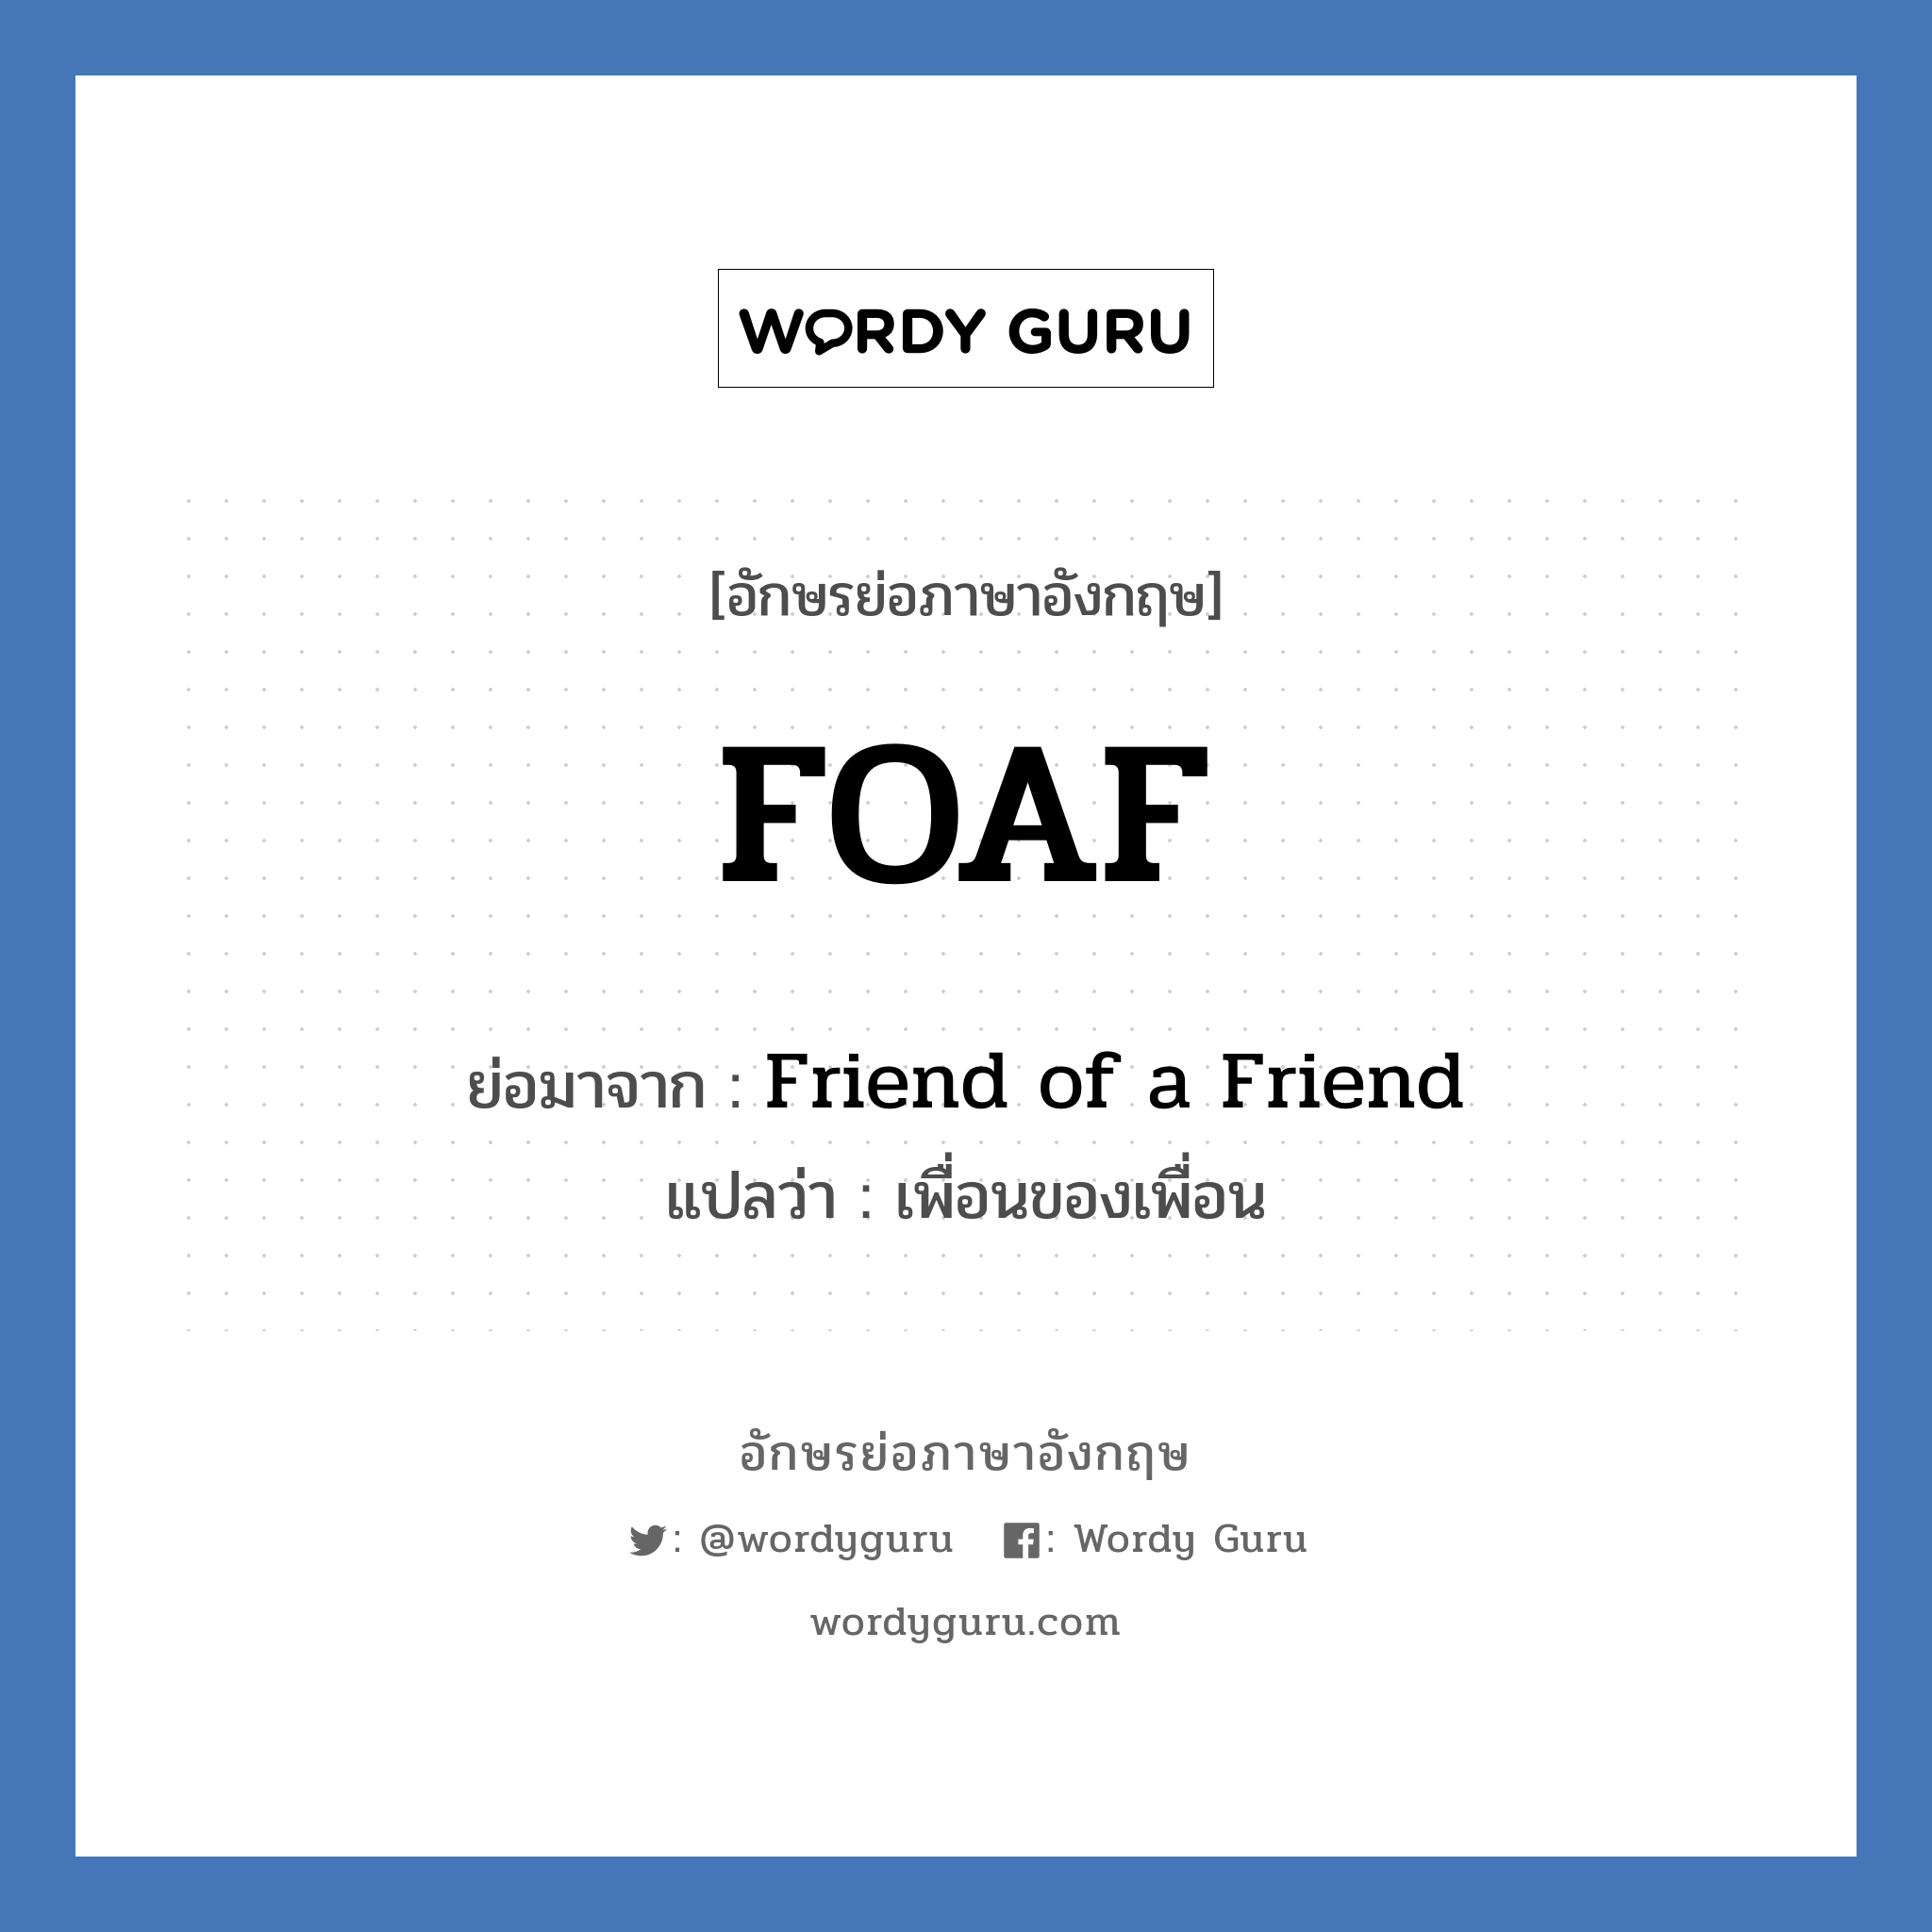 Friend of a Friend คำย่อคือ? แปลว่า?, อักษรย่อภาษาอังกฤษ Friend of a Friend ย่อมาจาก FOAF แปลว่า เพื่อนของเพื่อน